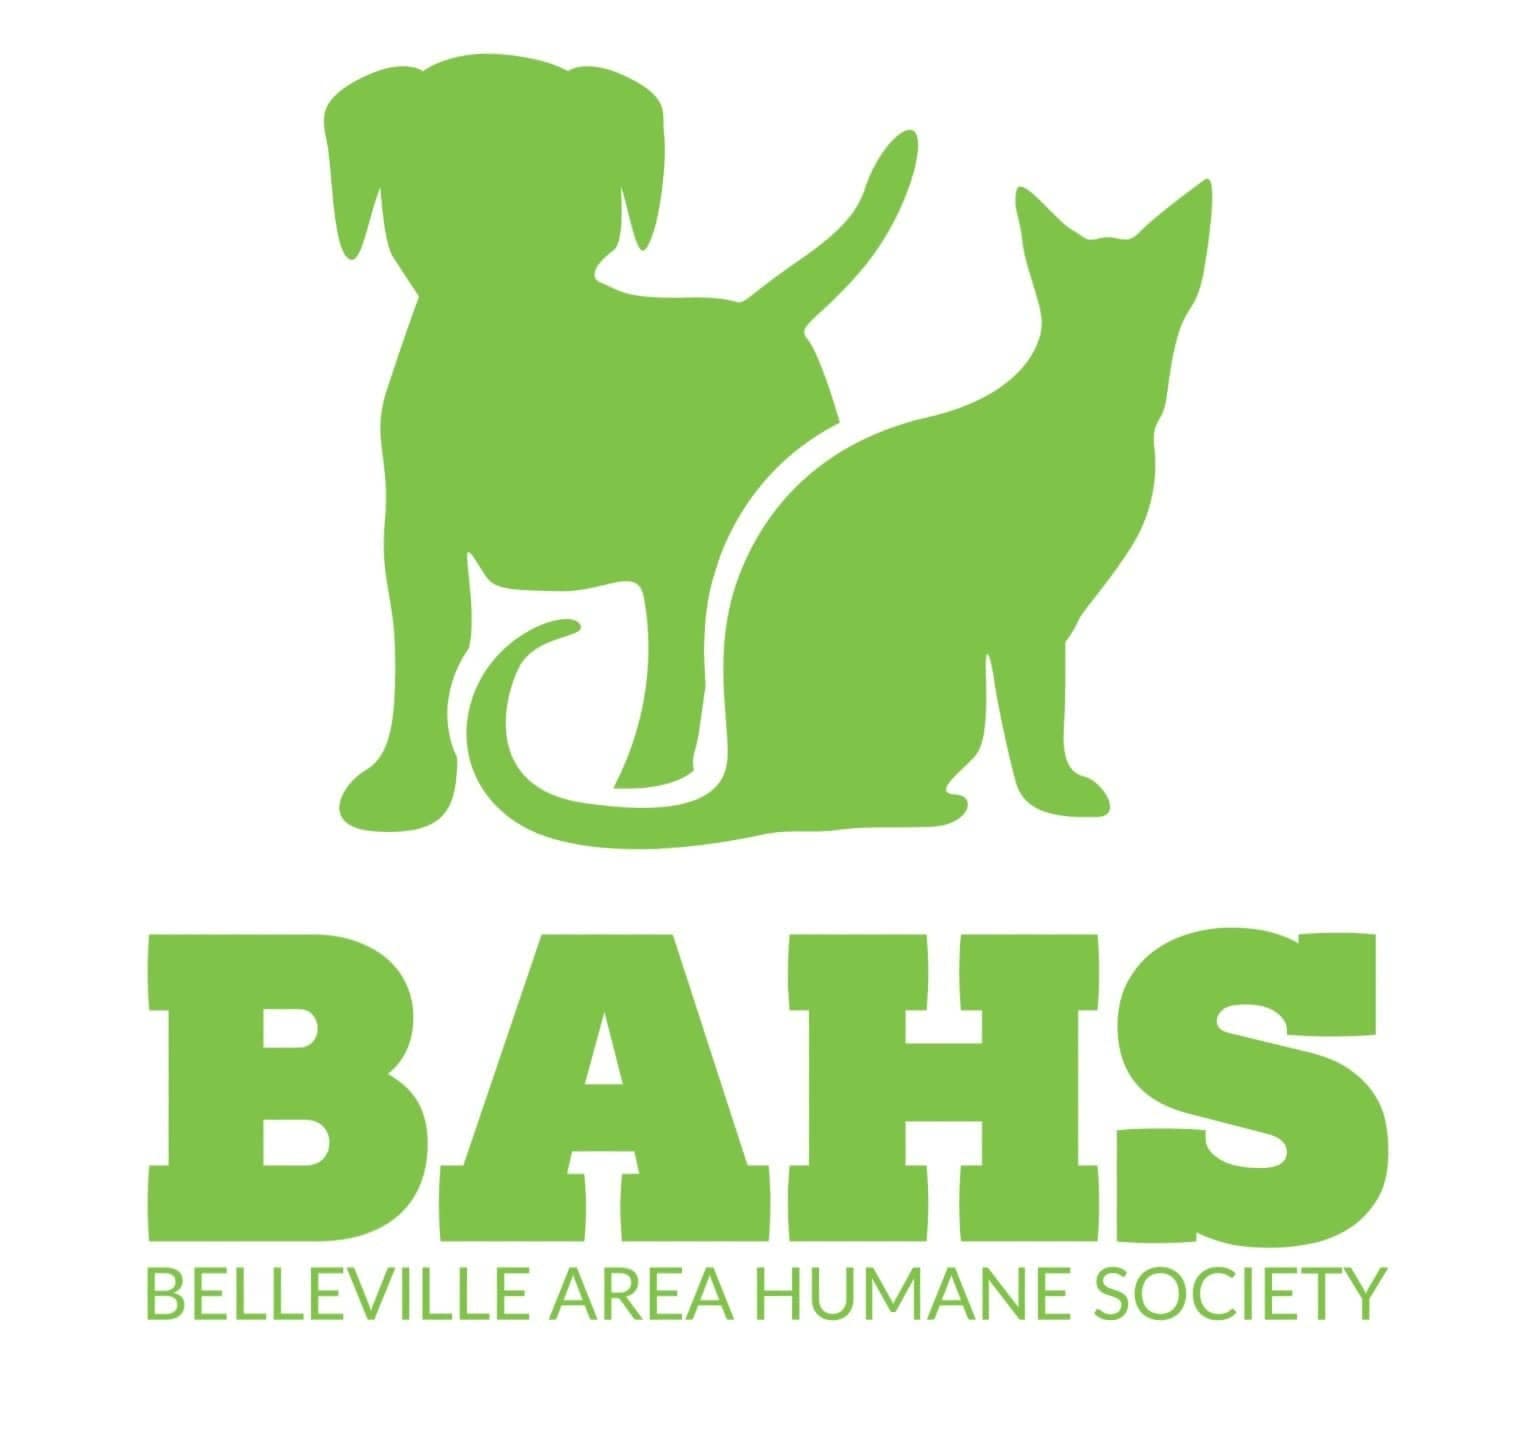 Belleville area humane society logo